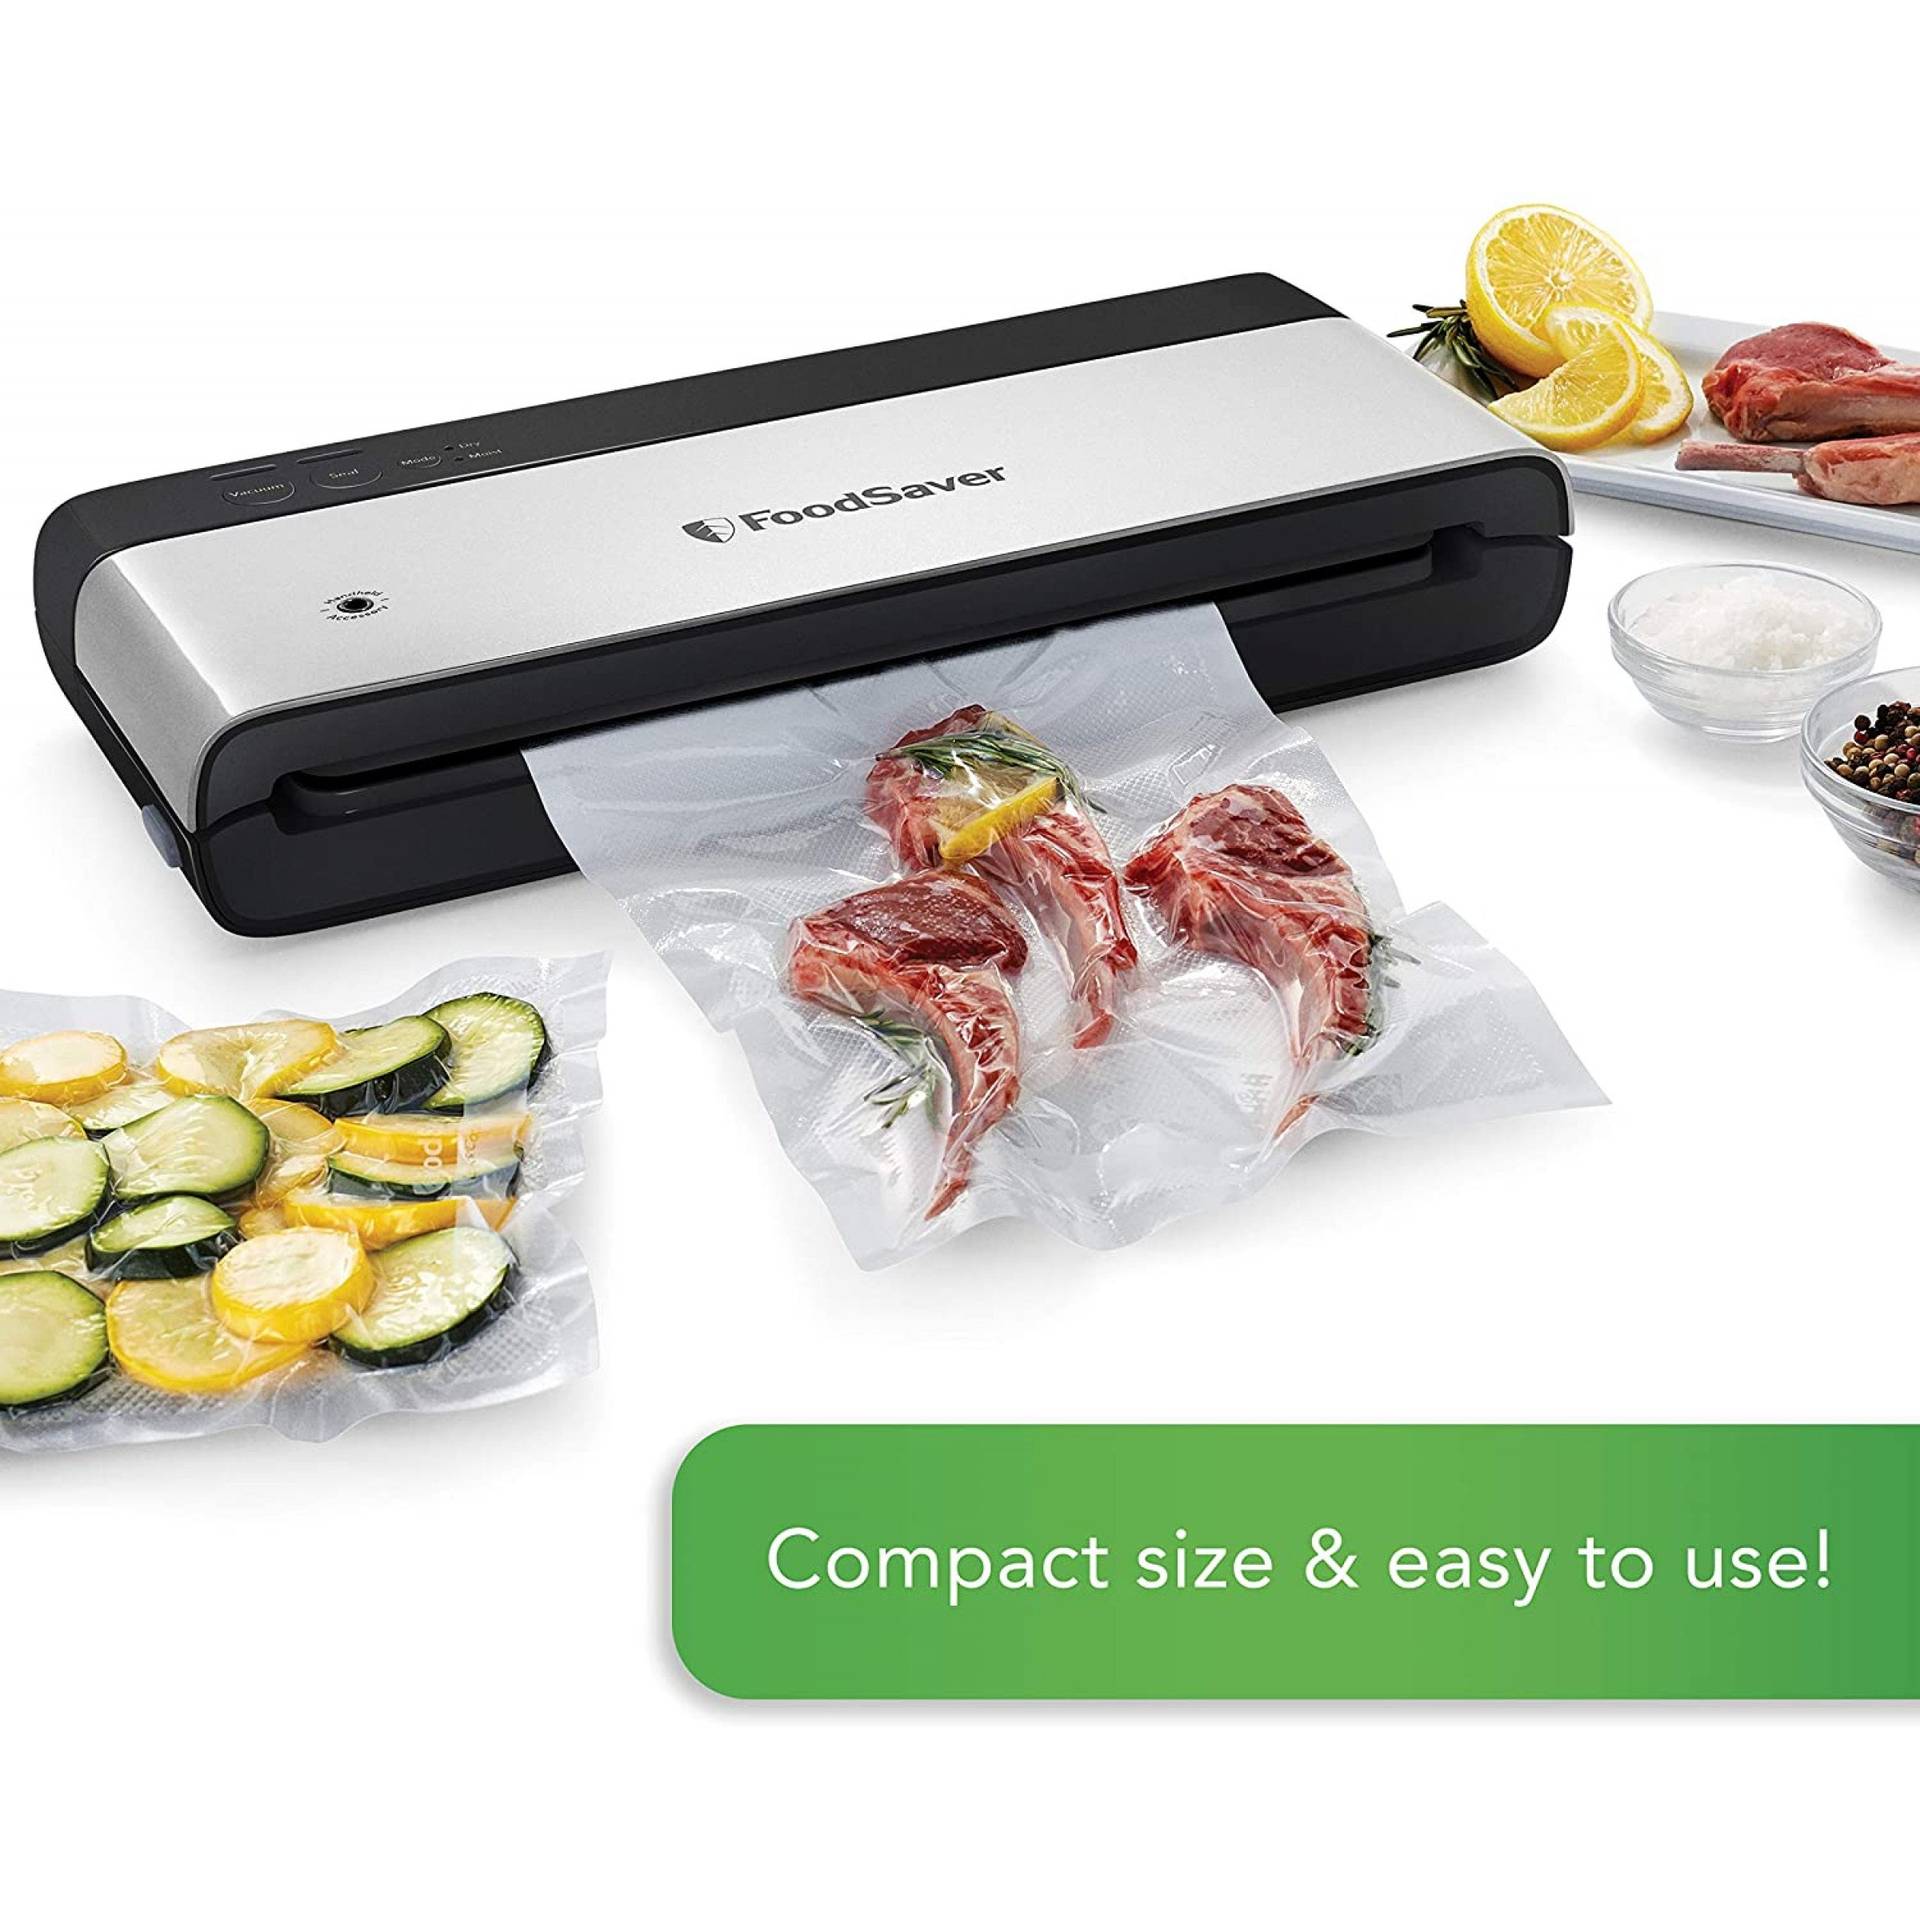 FoodSaver® Everyday Vacuum Sealer with Precut Bags